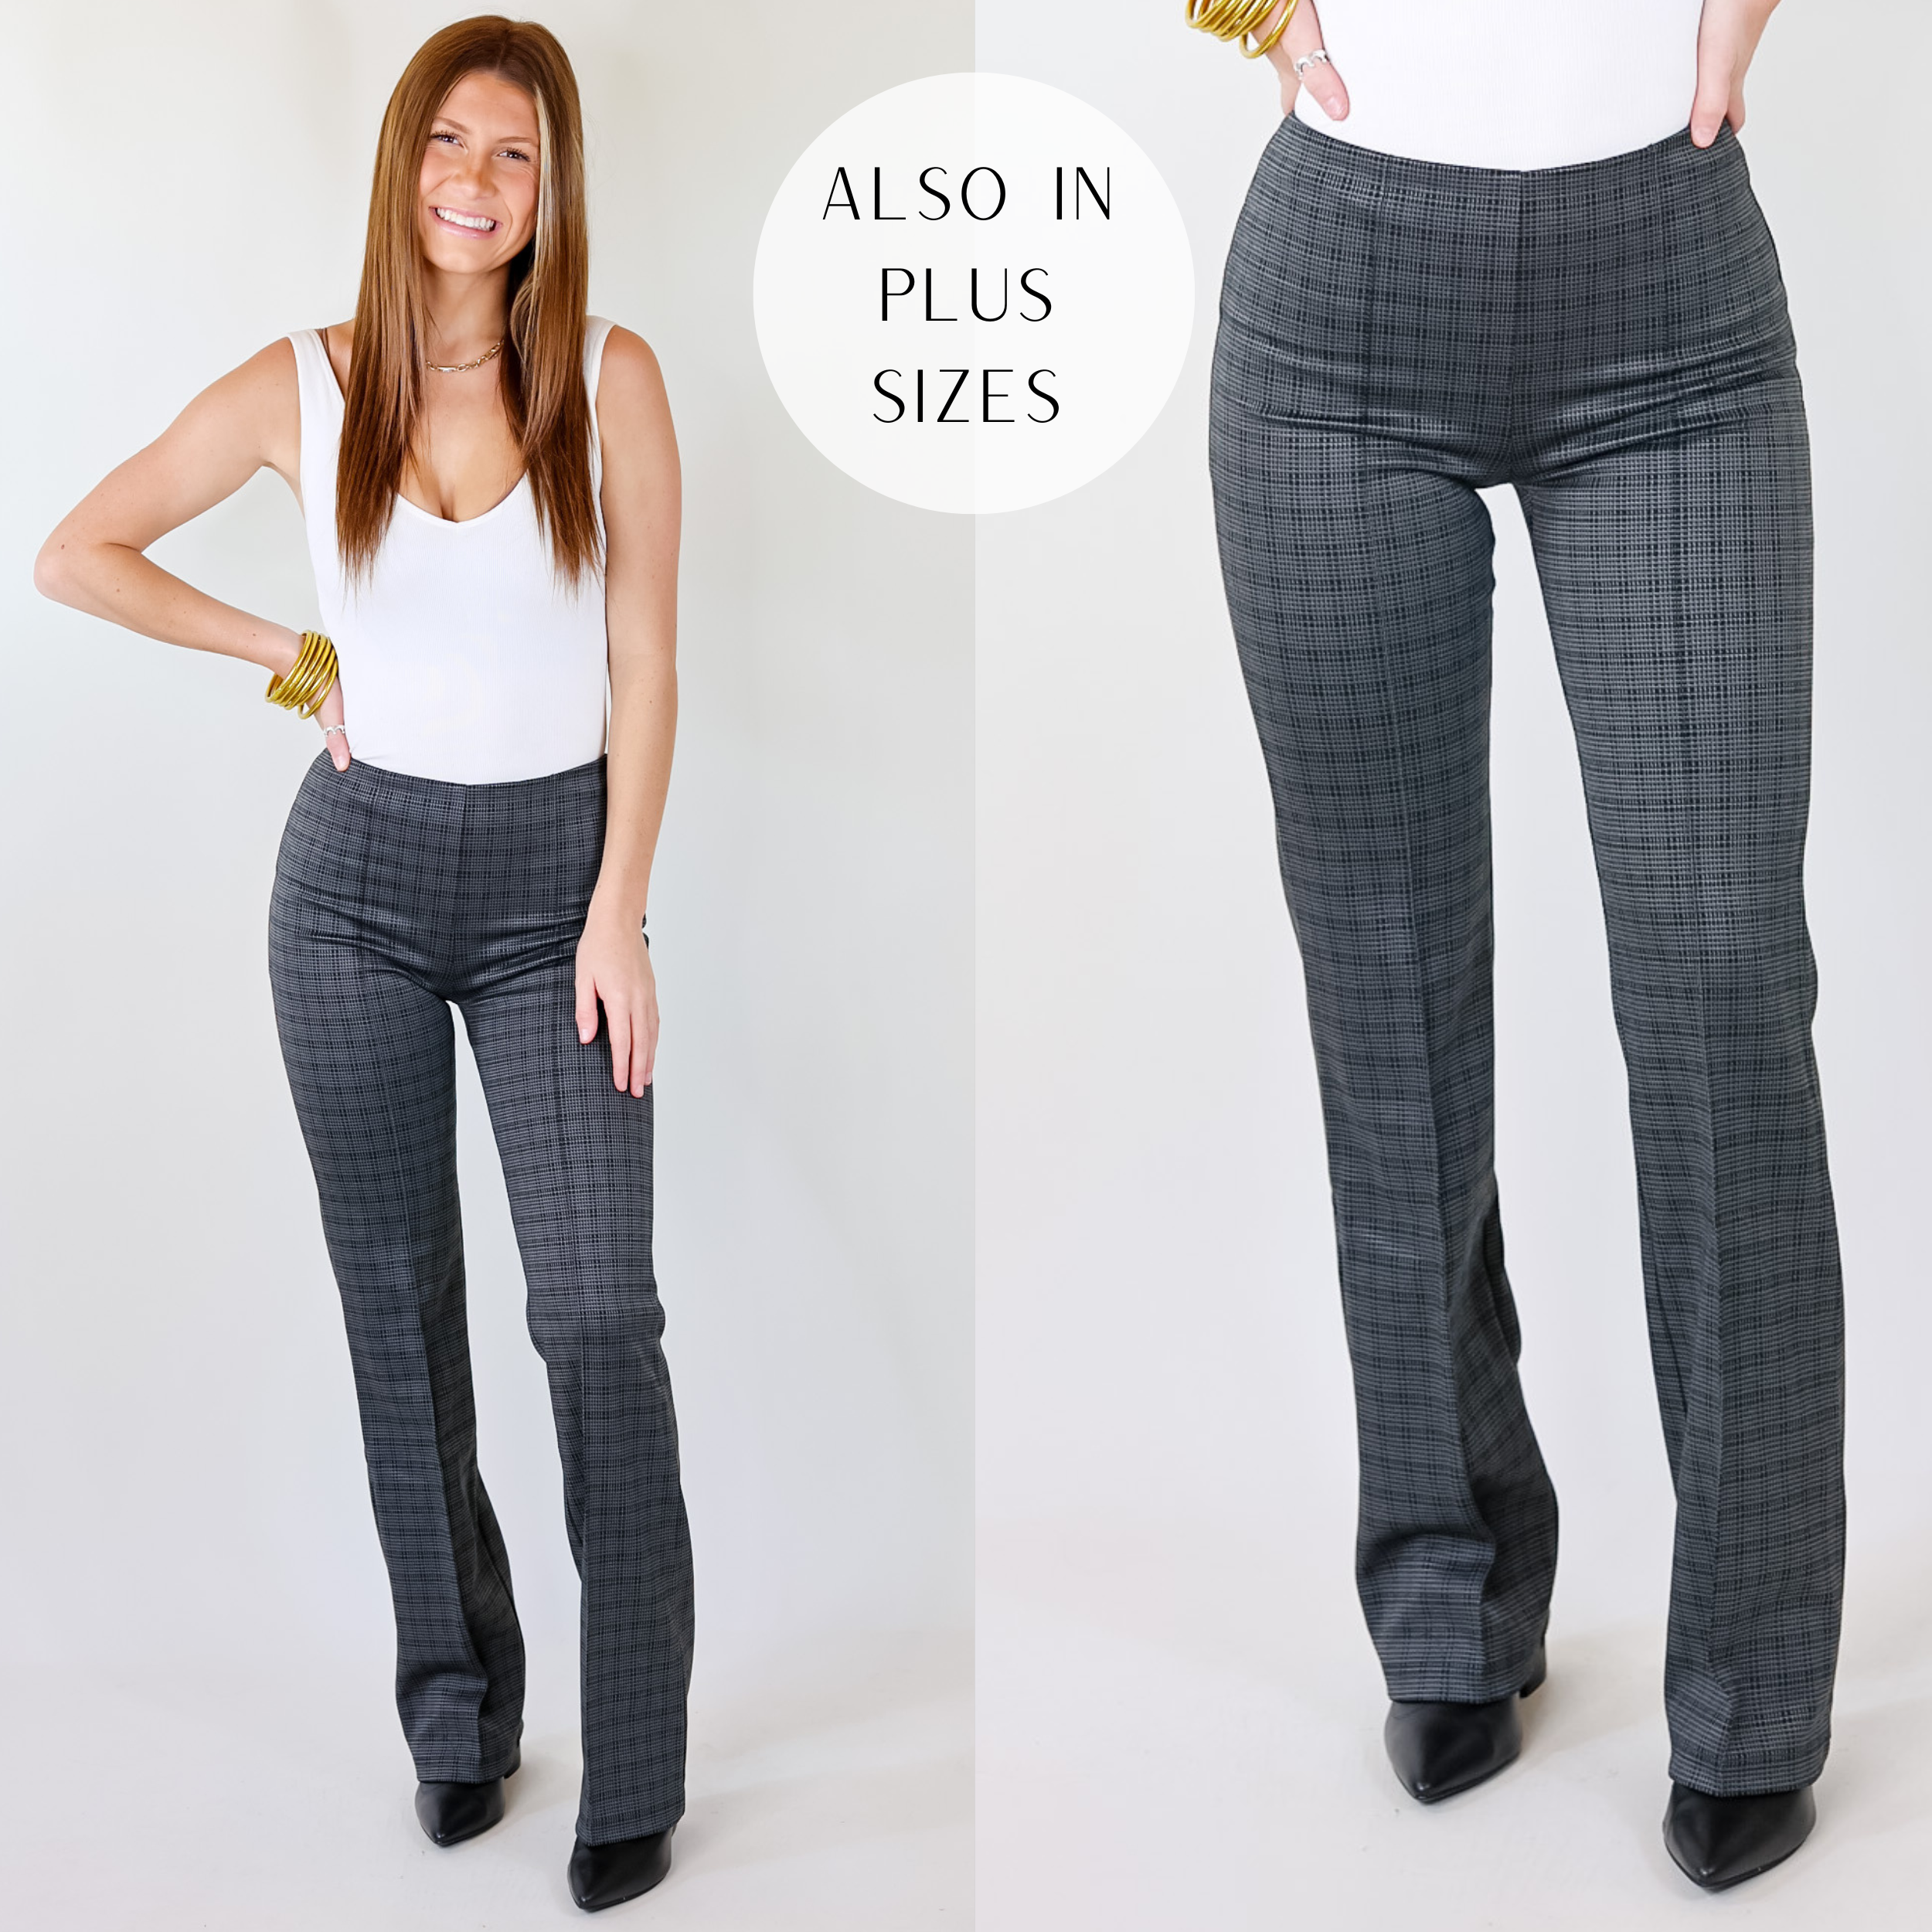 Lyssé | Elysse Jacquard Wide Leg Pants in Black - Giddy Up Glamour Boutique